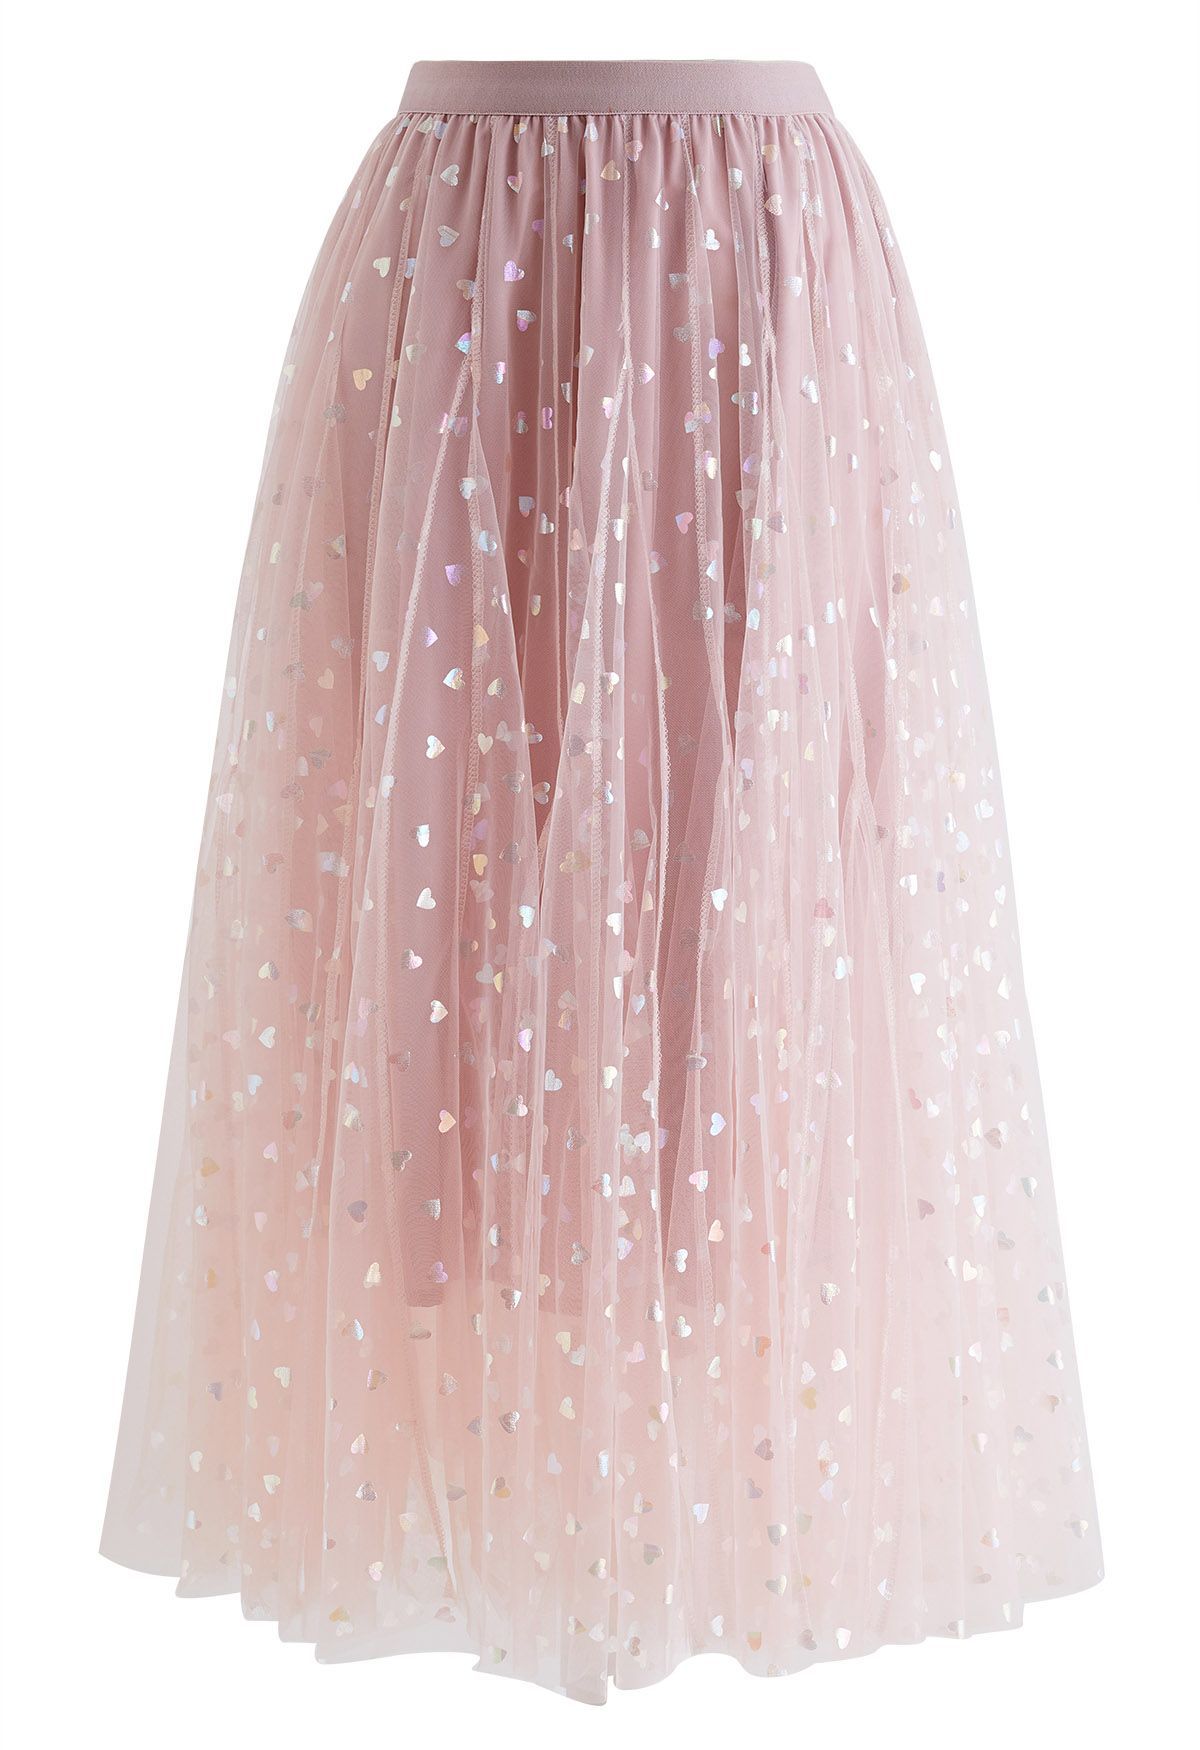 Iridescent Hearts Mesh Tulle Midi Skirt in Pink | Chicwish